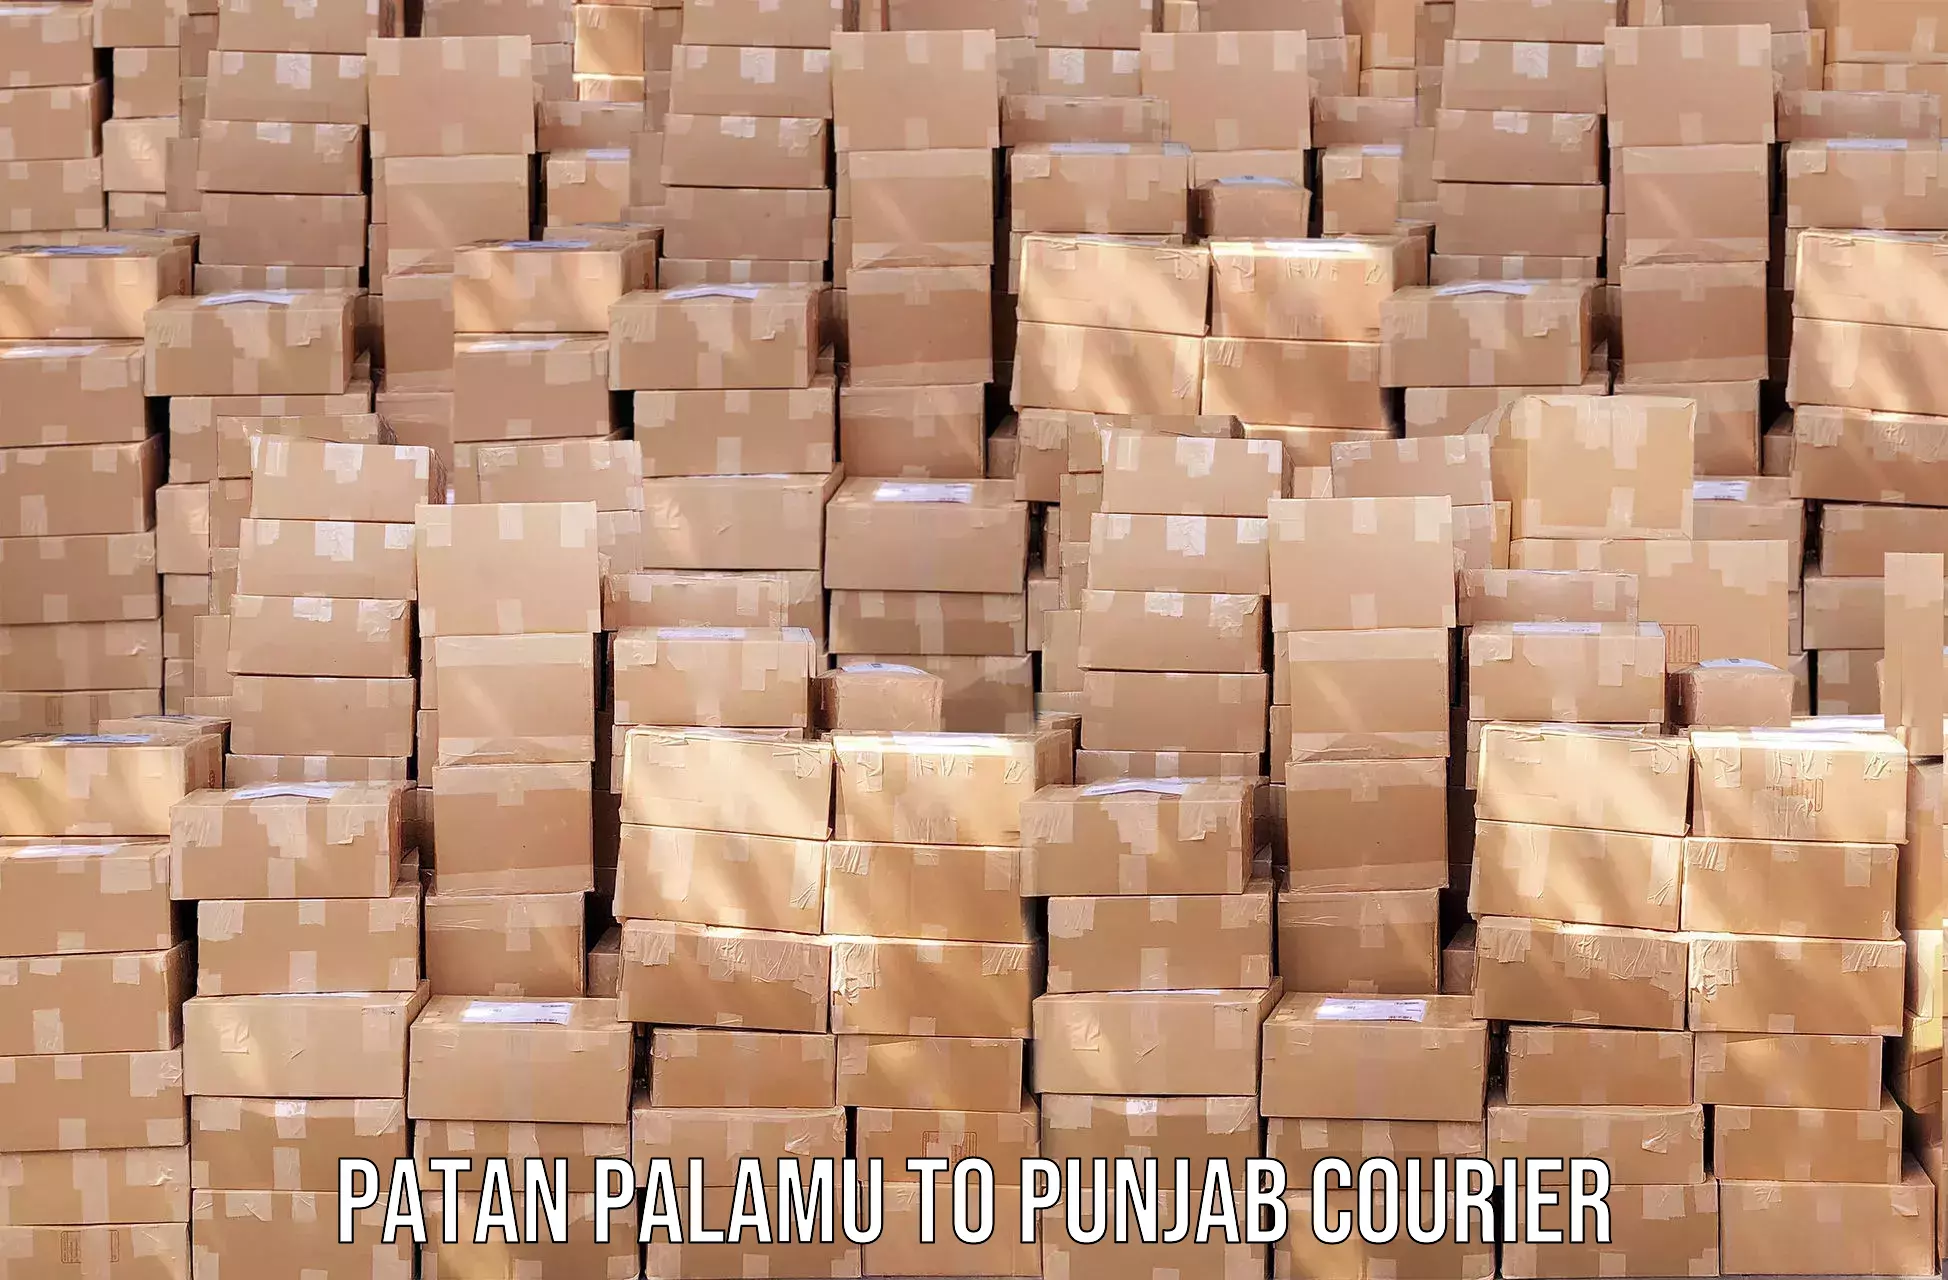 Digital courier platforms Patan Palamu to Dera Bassi